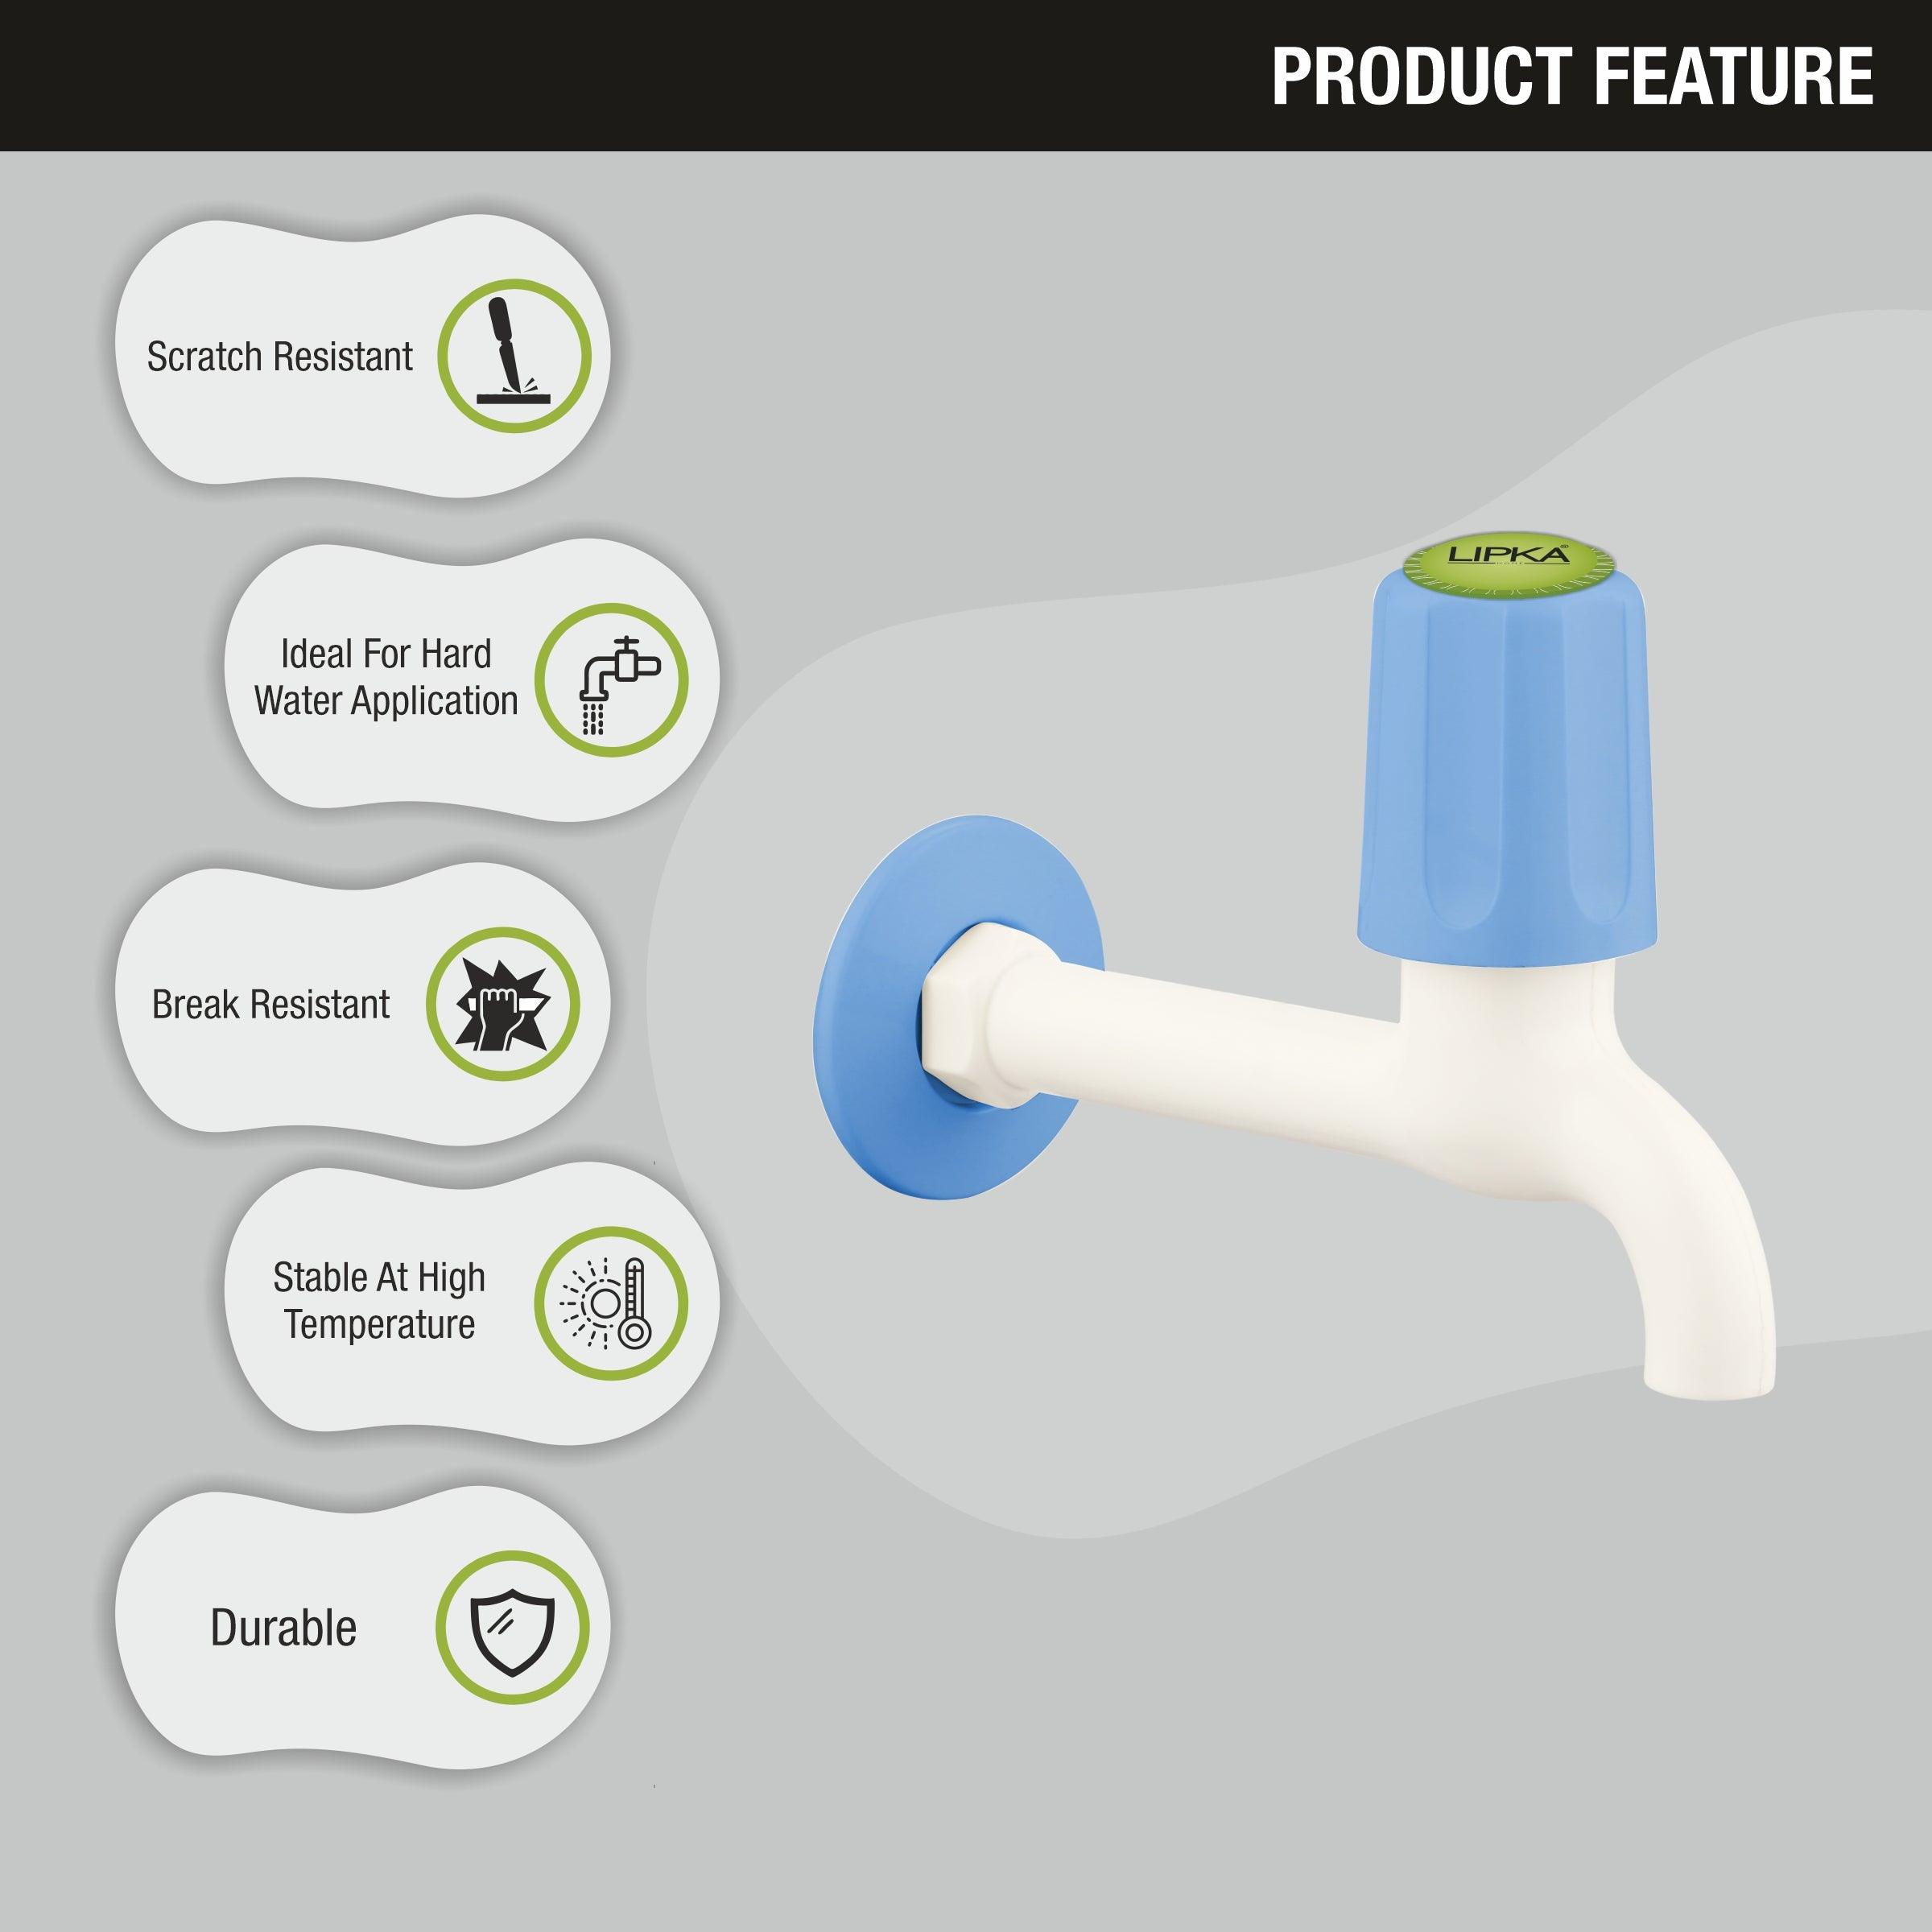 Nobel Bib Tap Long Body PTMT Faucet features